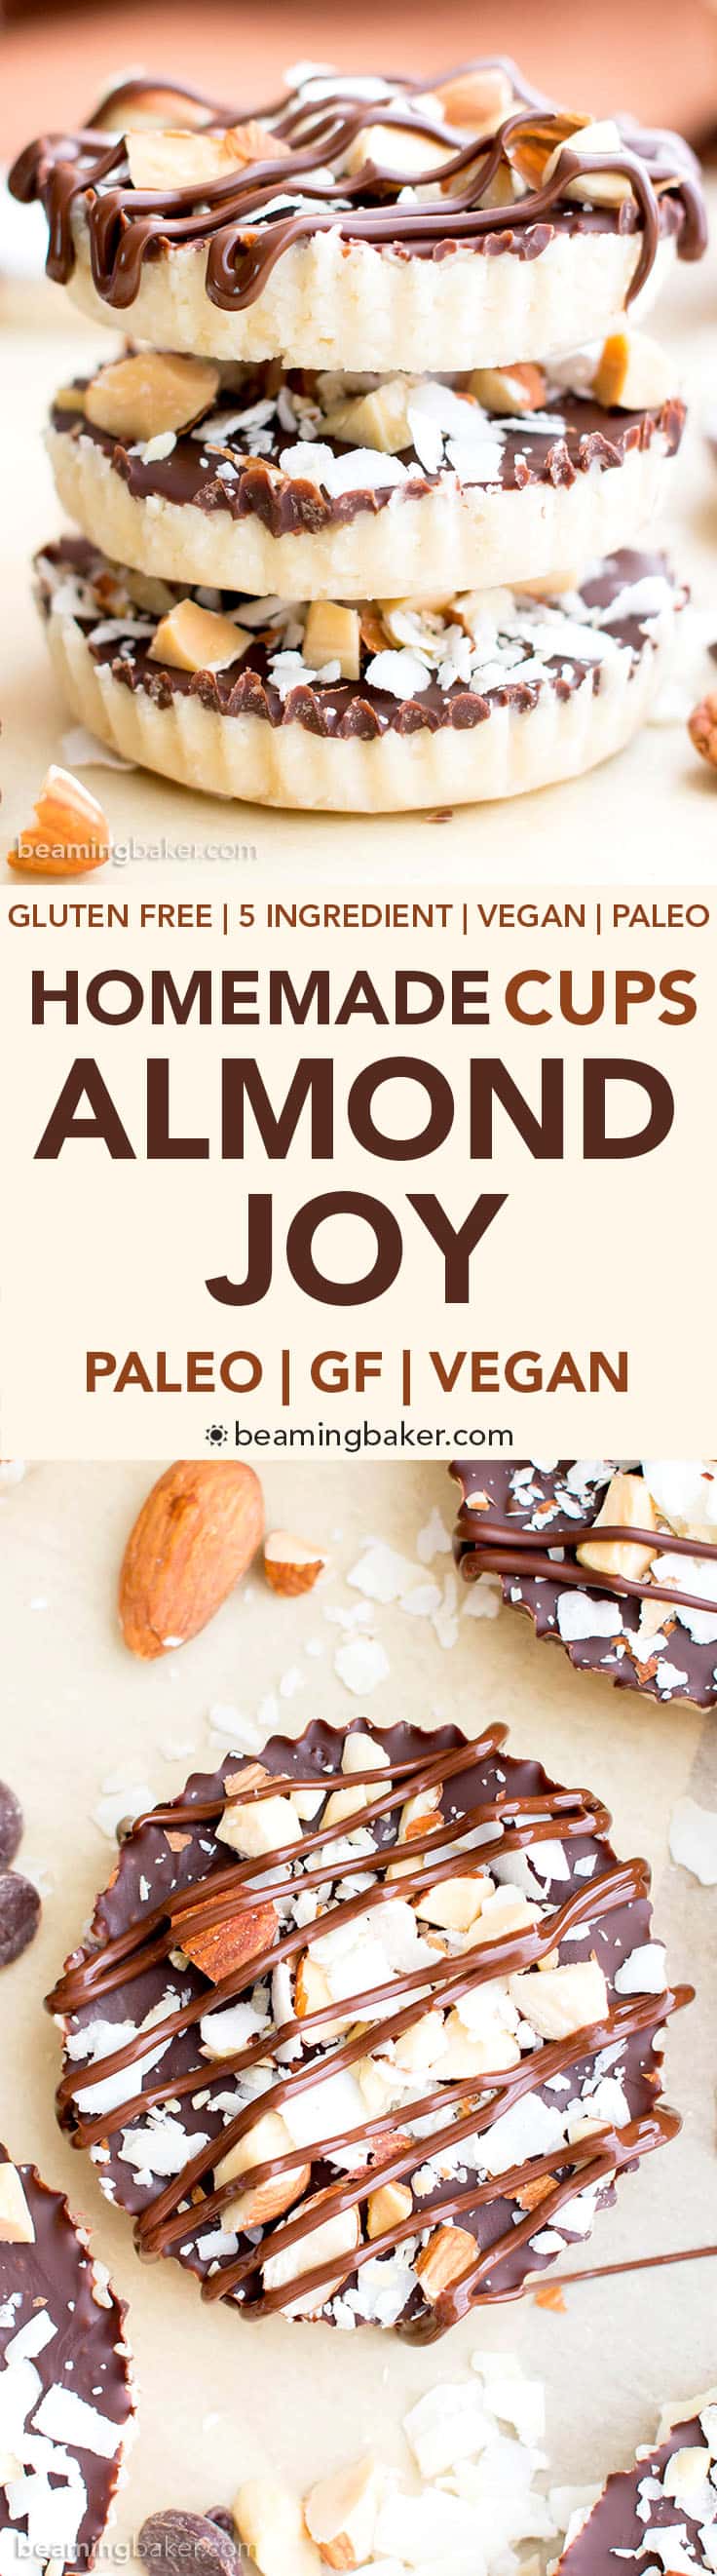 Homemade Almond Joy Cups (Paleo, V, GF): a 5-ingredient recipe for rich, nutty Almond Joy cups layered in velvety chocolate. #Paleo #Vegan #GlutenFree #5Ingredient | BeamingBaker.com